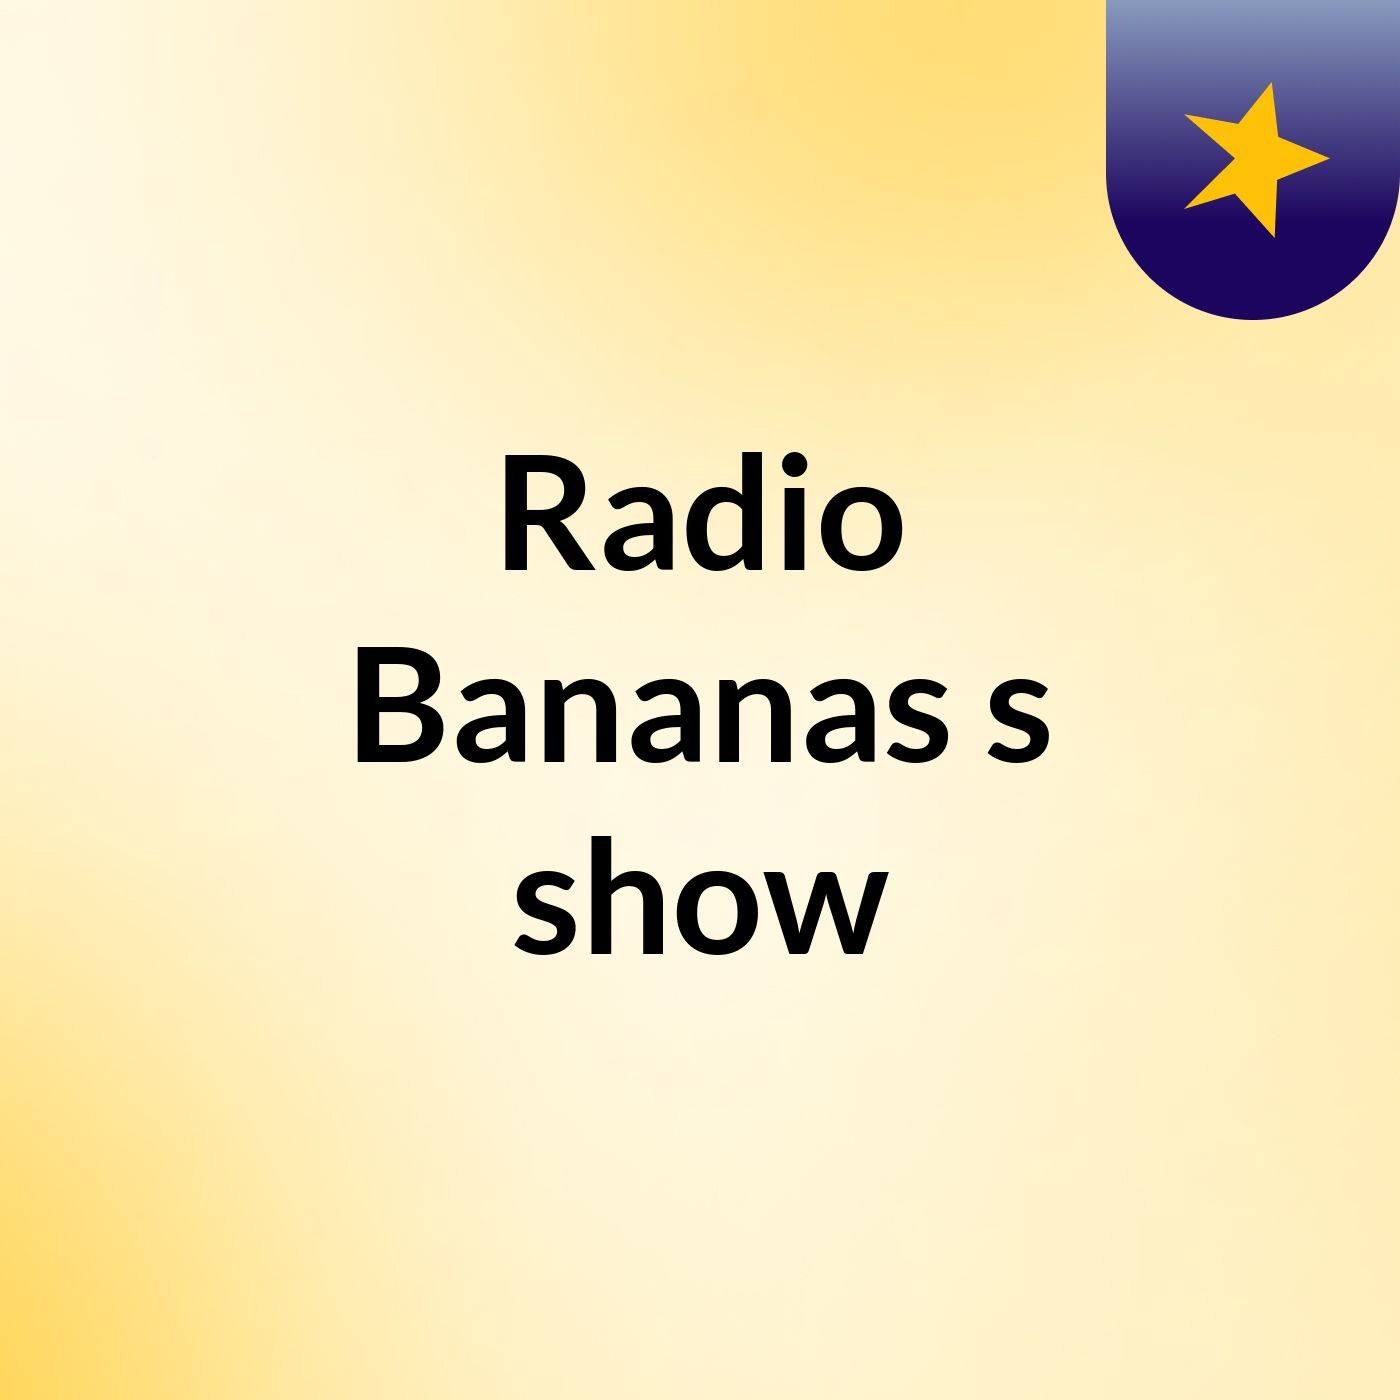 Radio Bananas's show